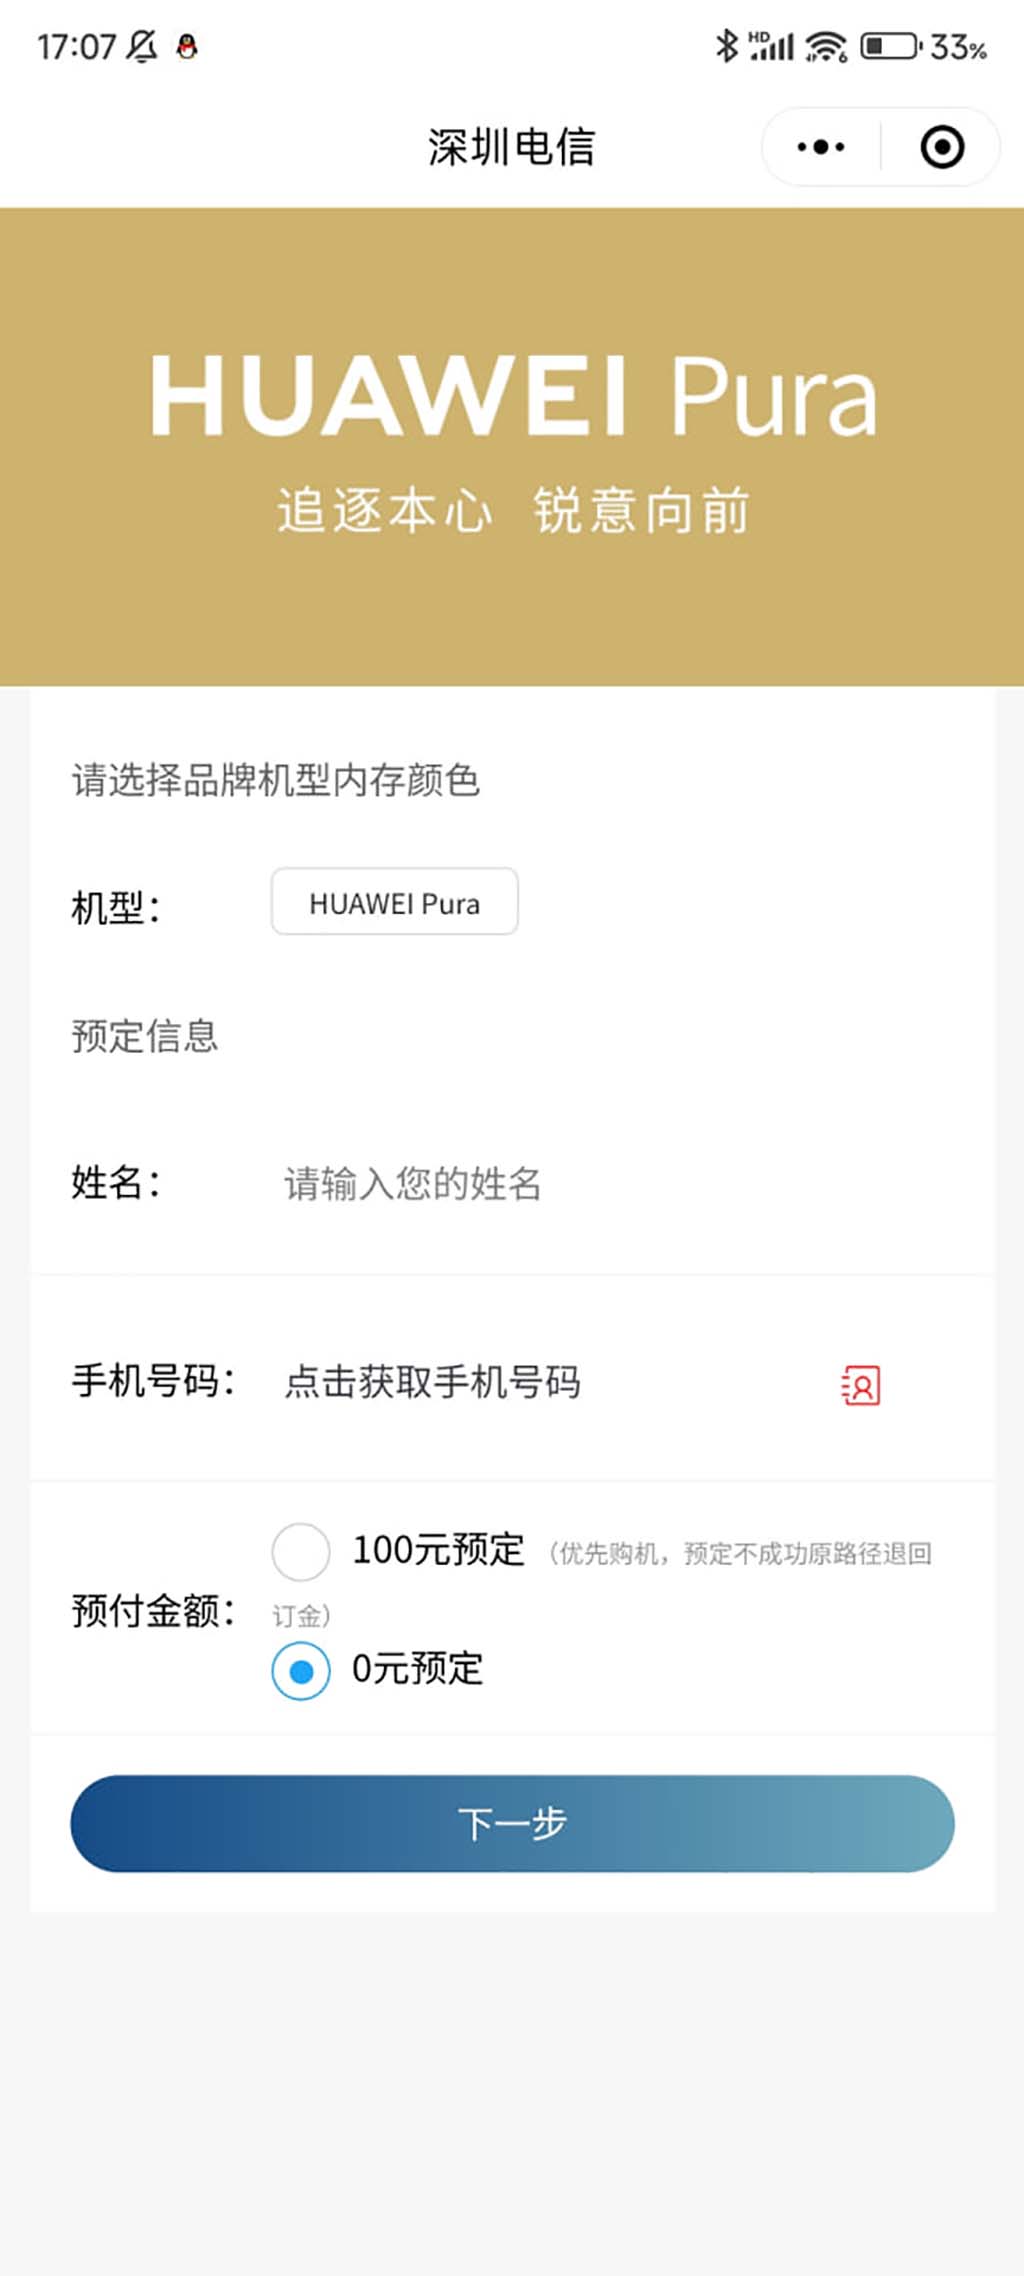 Shenzhen Telecom Huawei Pura 70 reservations